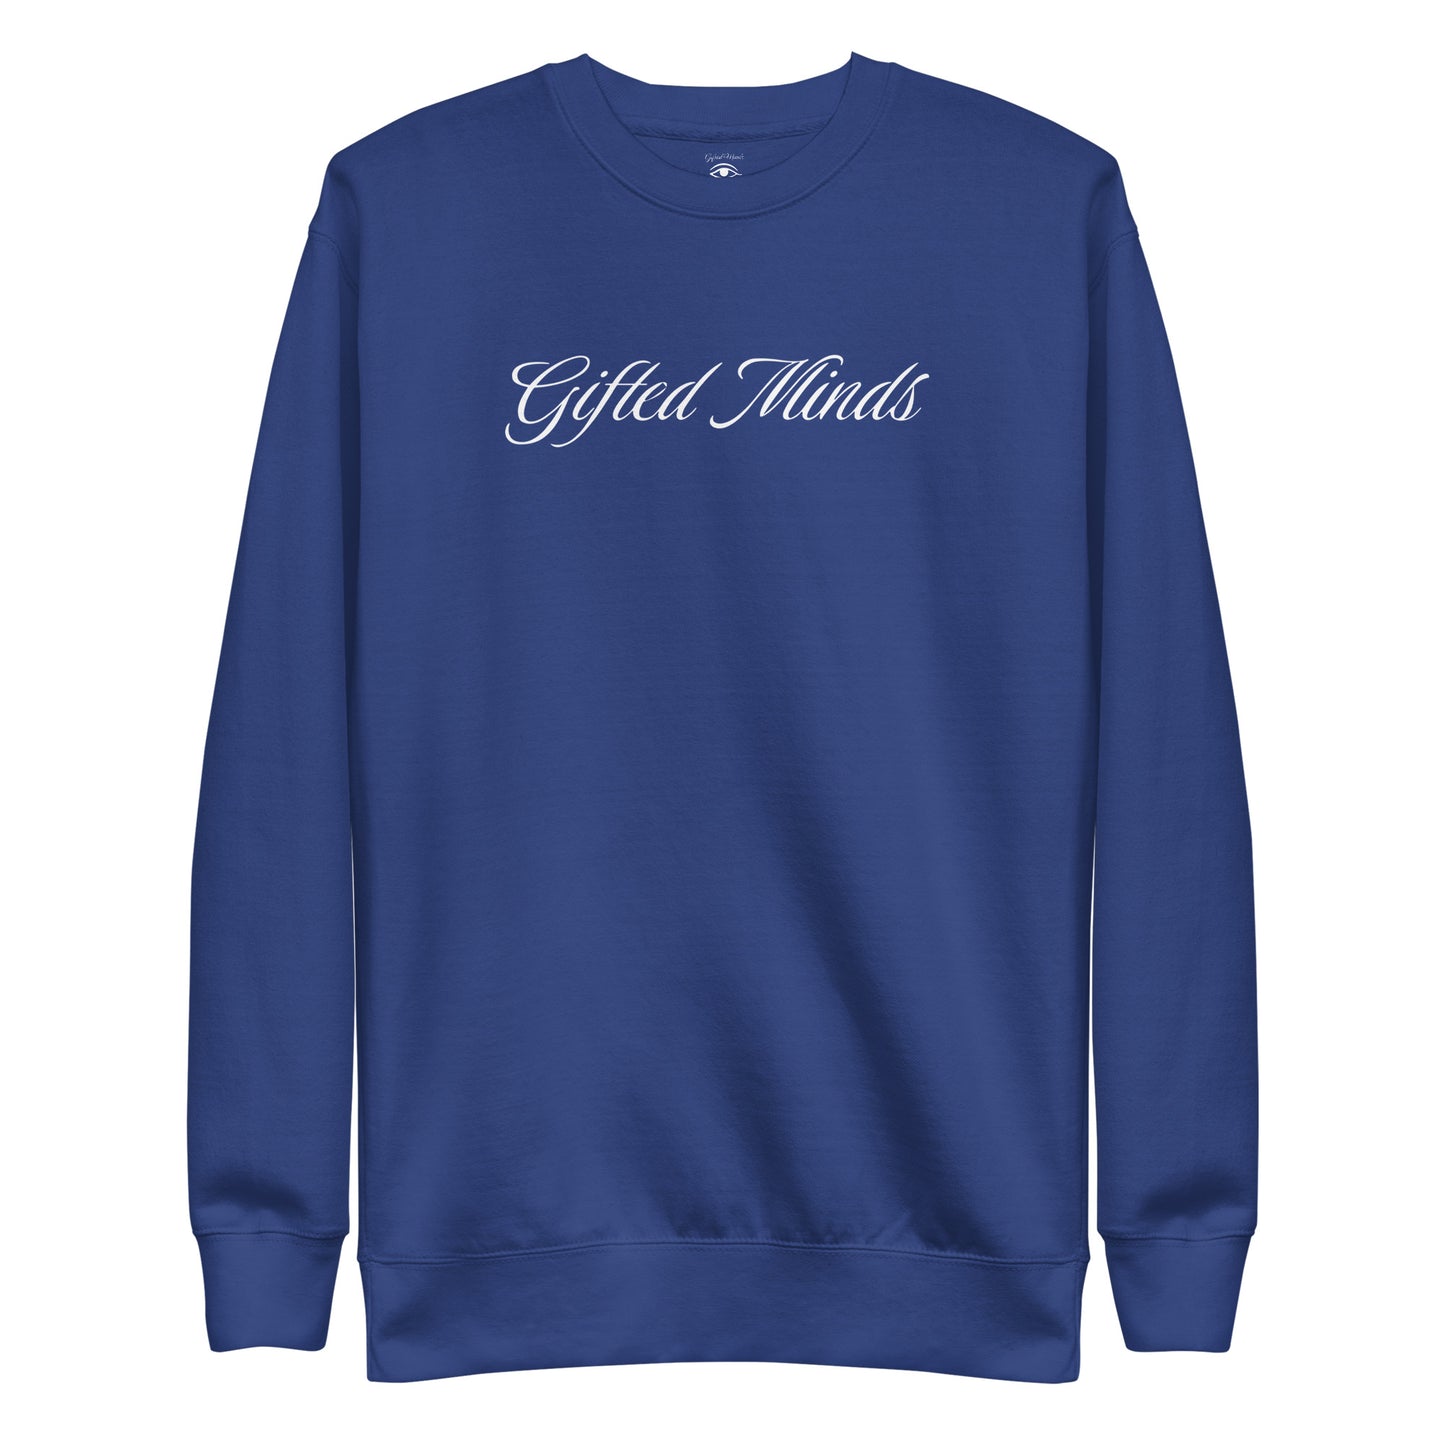 God's Fortune Sweatshirt - GFTD MNDS